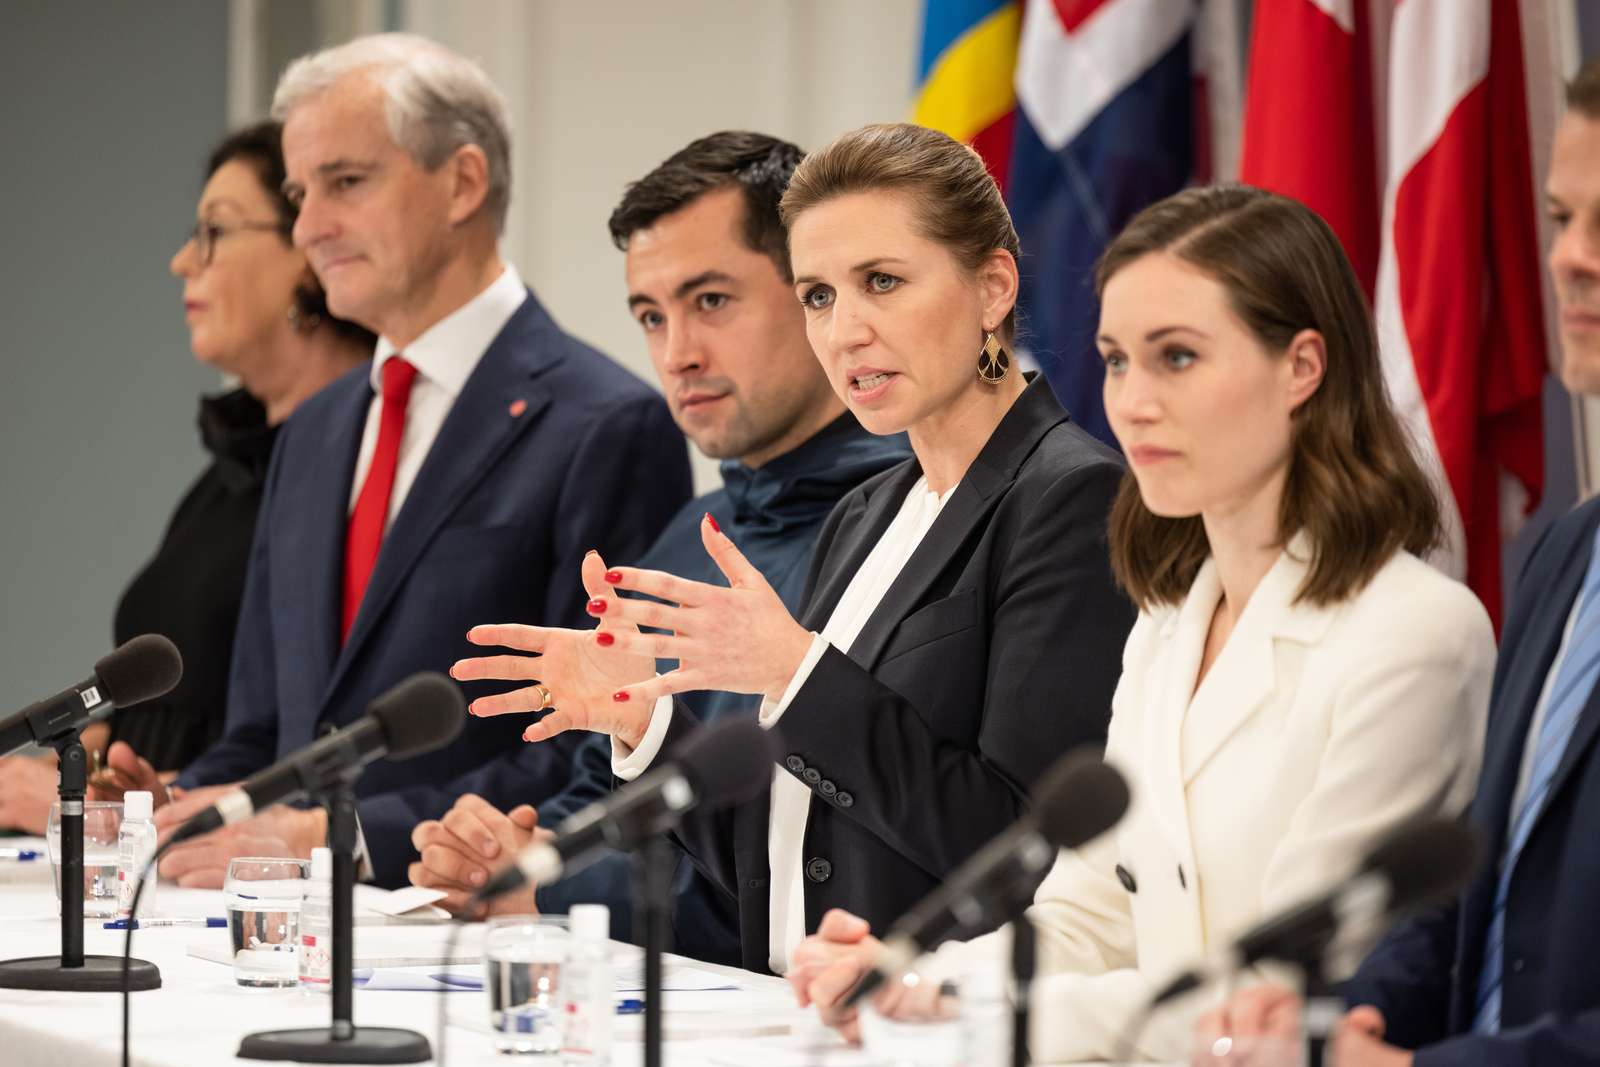 Nordic prime ministers